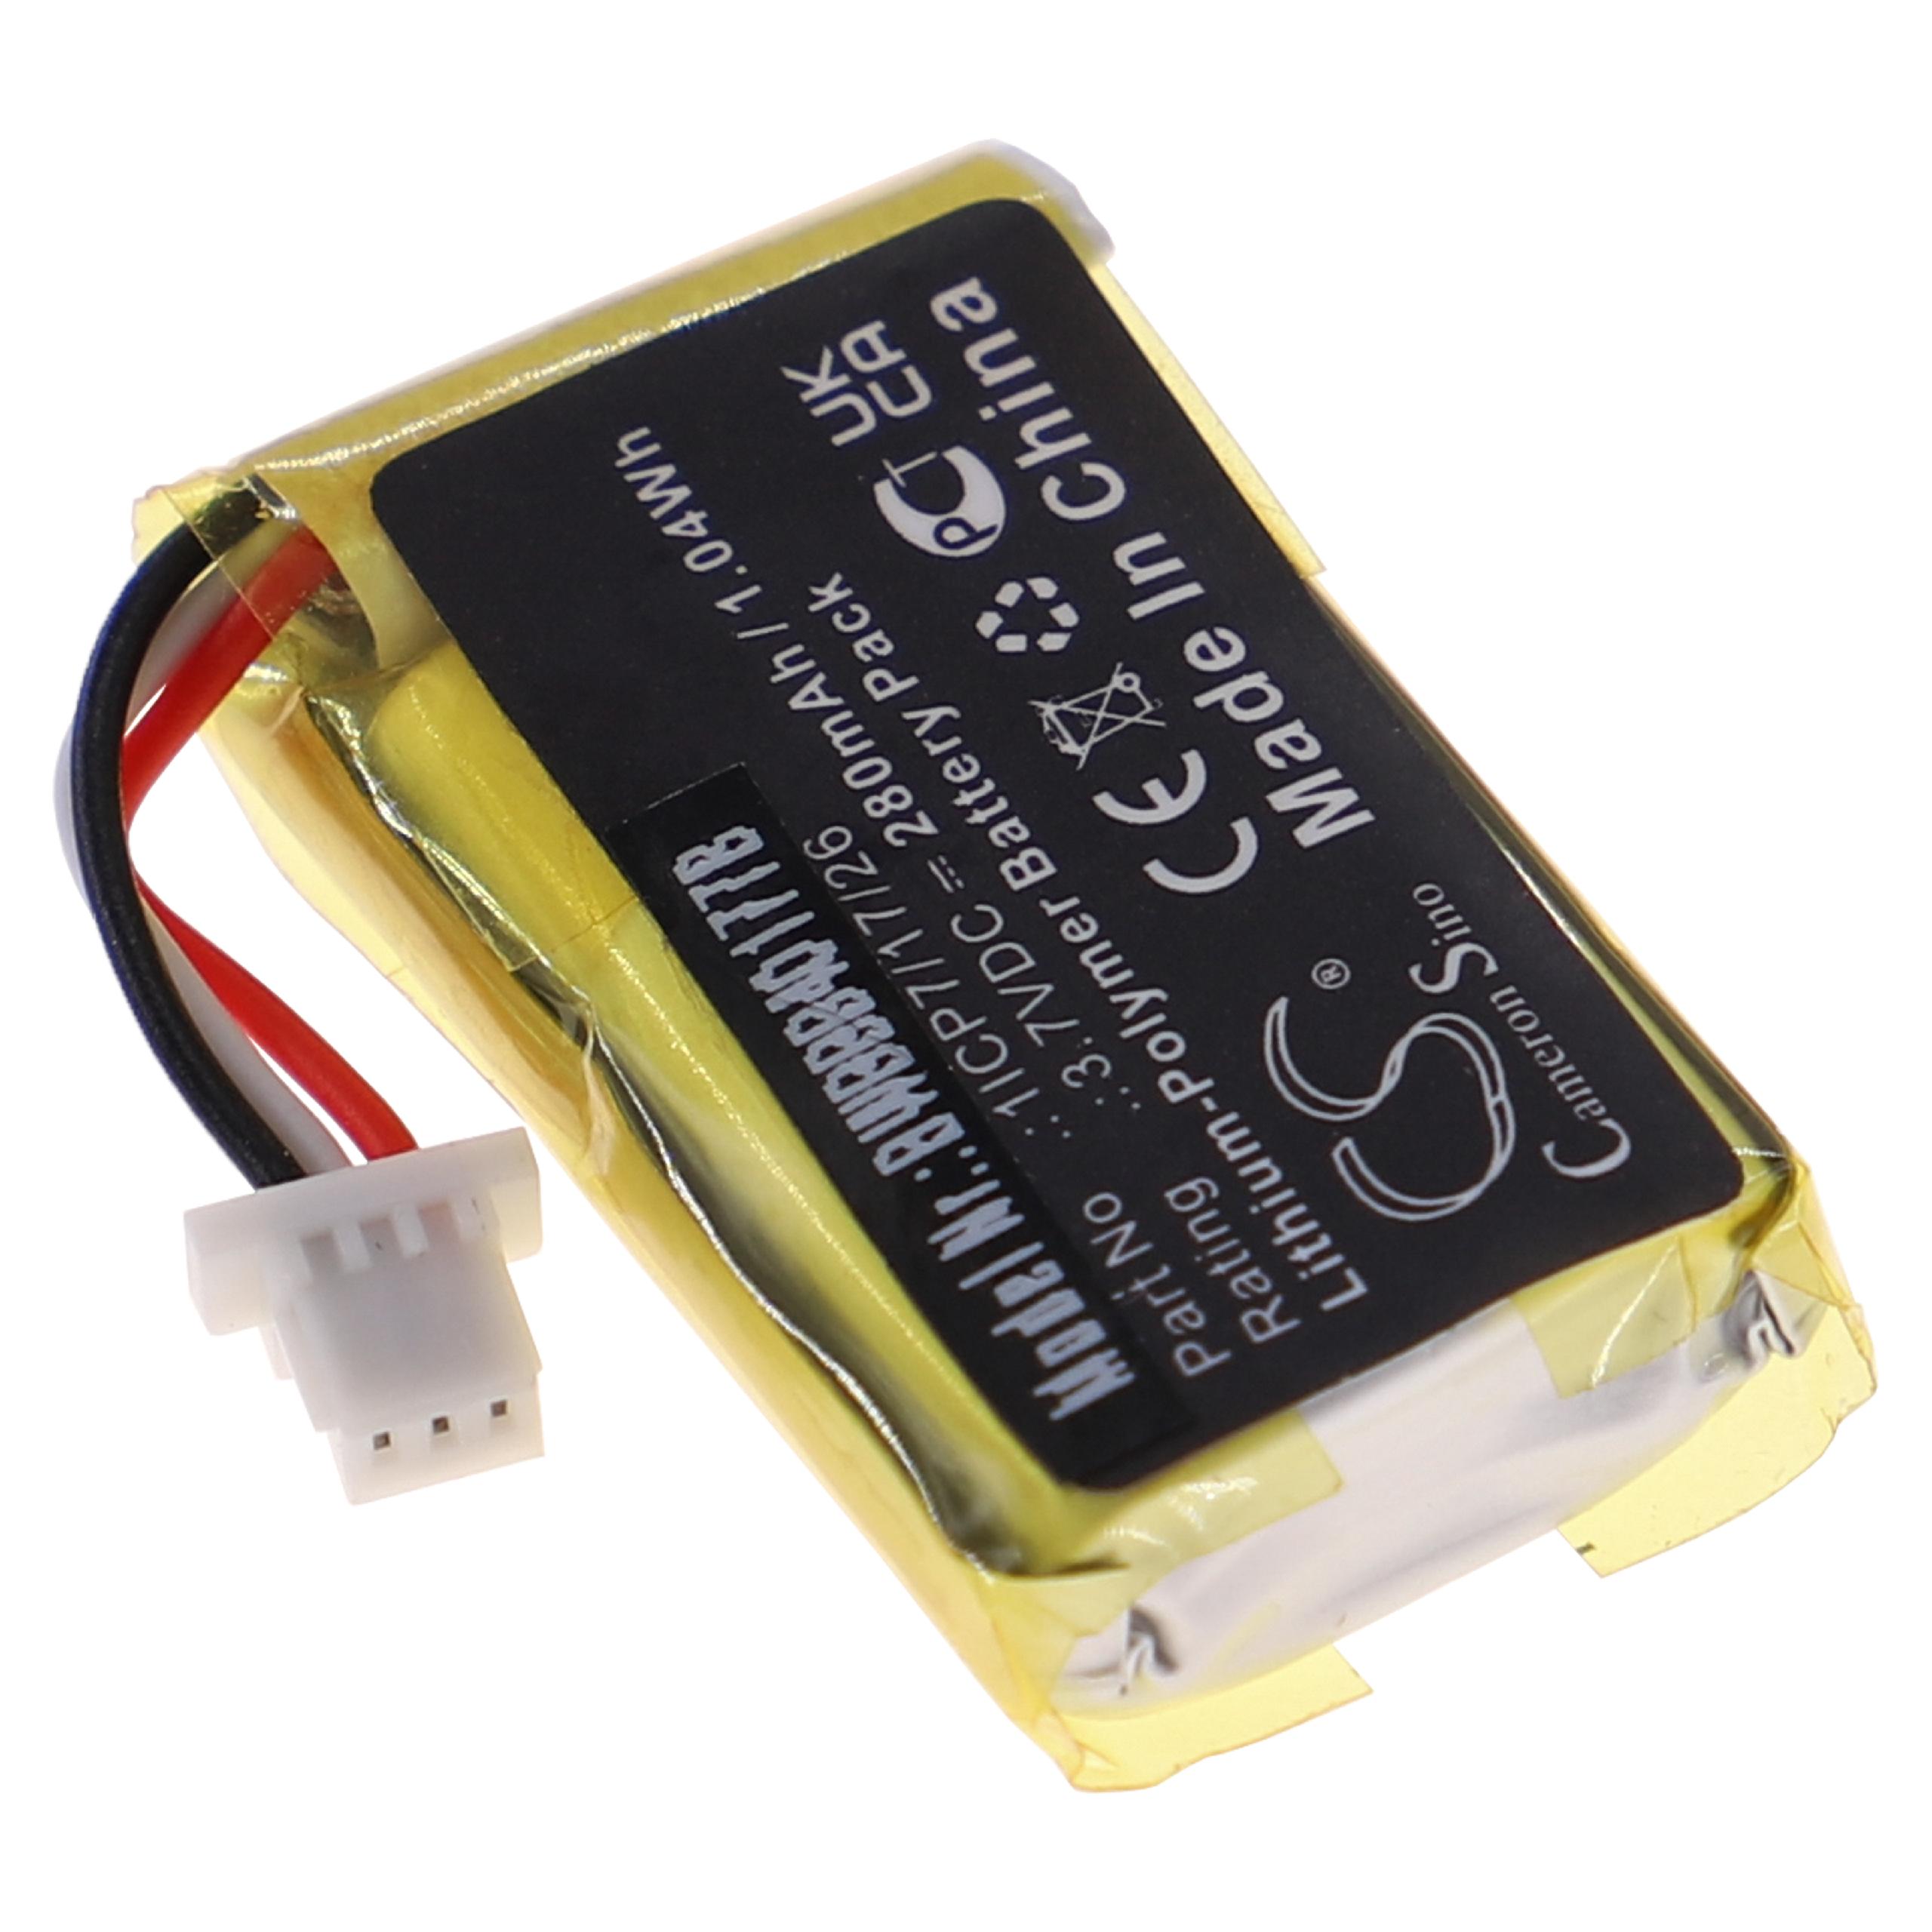 Intercom Doorbell Battery Replacement for Nest 1ICP7/17/26 - 280mAh 3.7V Li-polymer